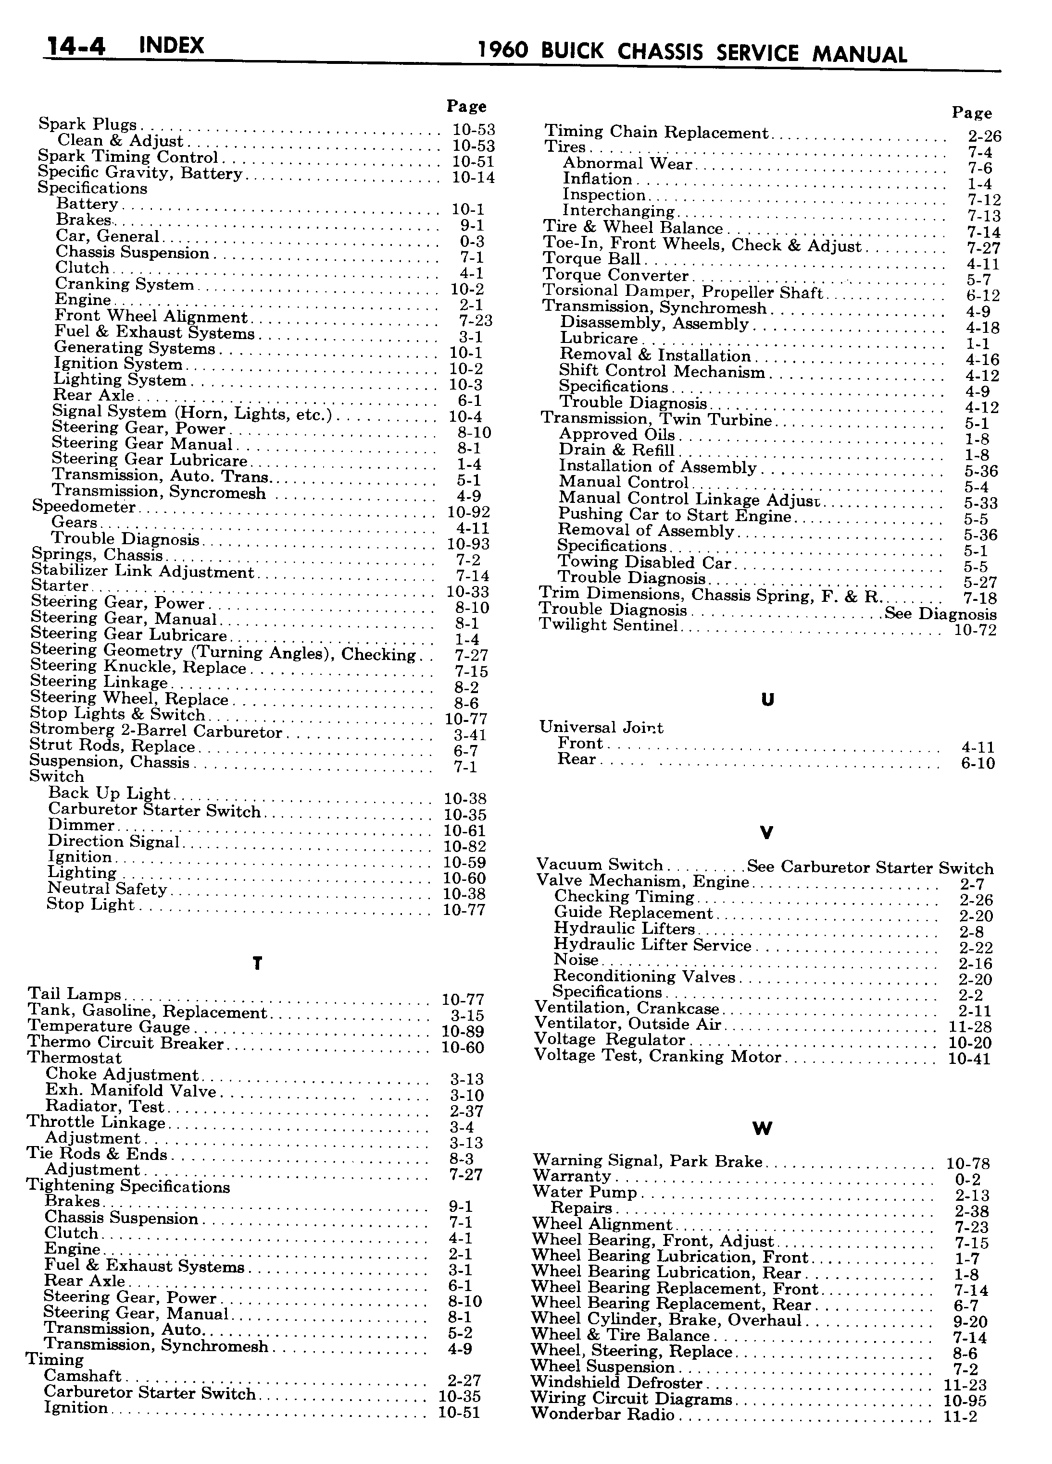 n_14 1960 Buick Shop Manual - Index-004-004.jpg